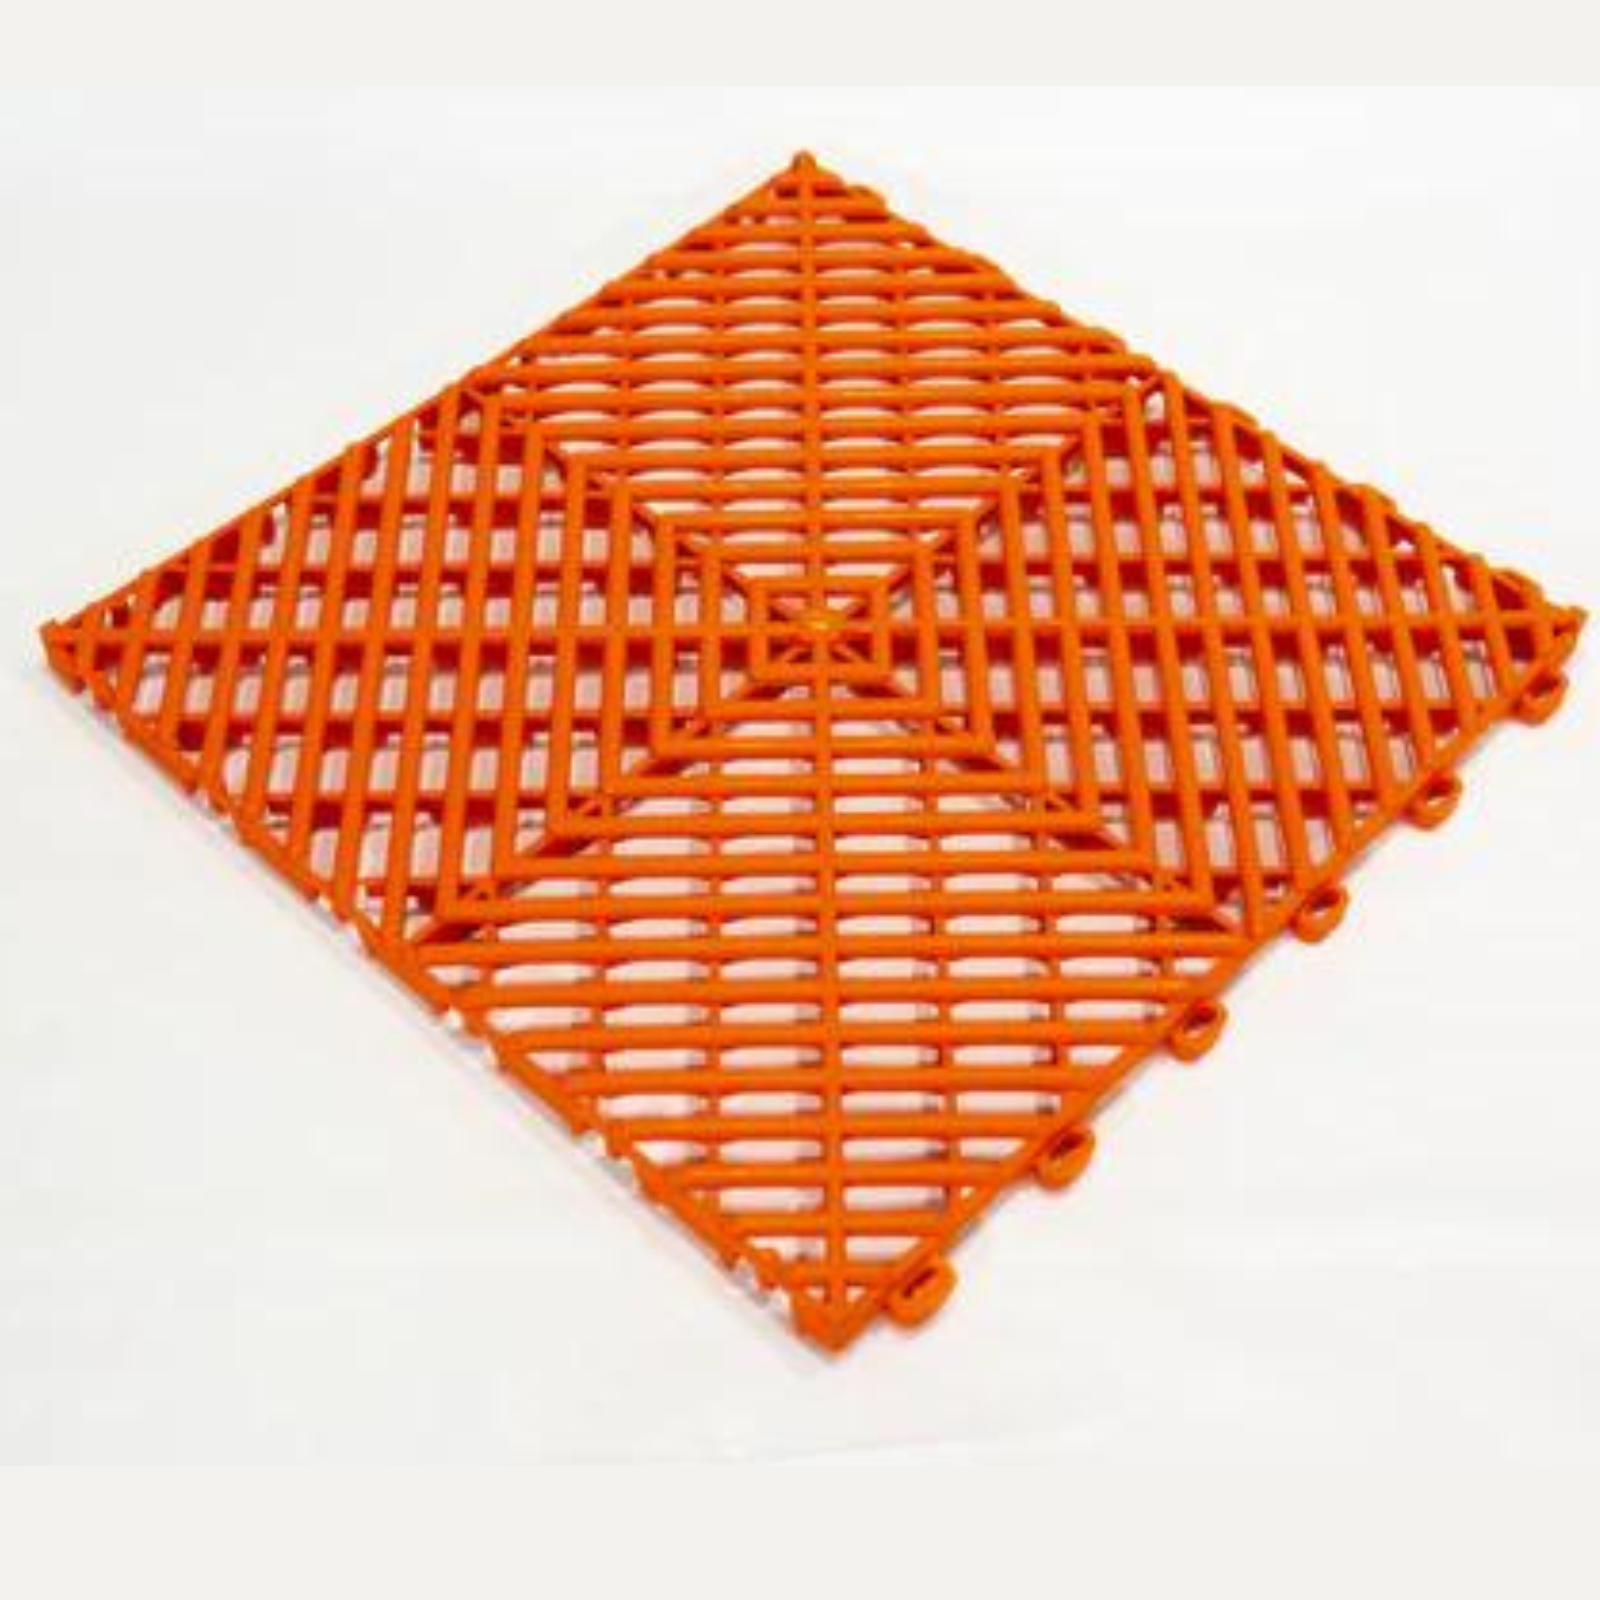 Modular Garage Flooring Tile - Box with 25 tiles- Orange color